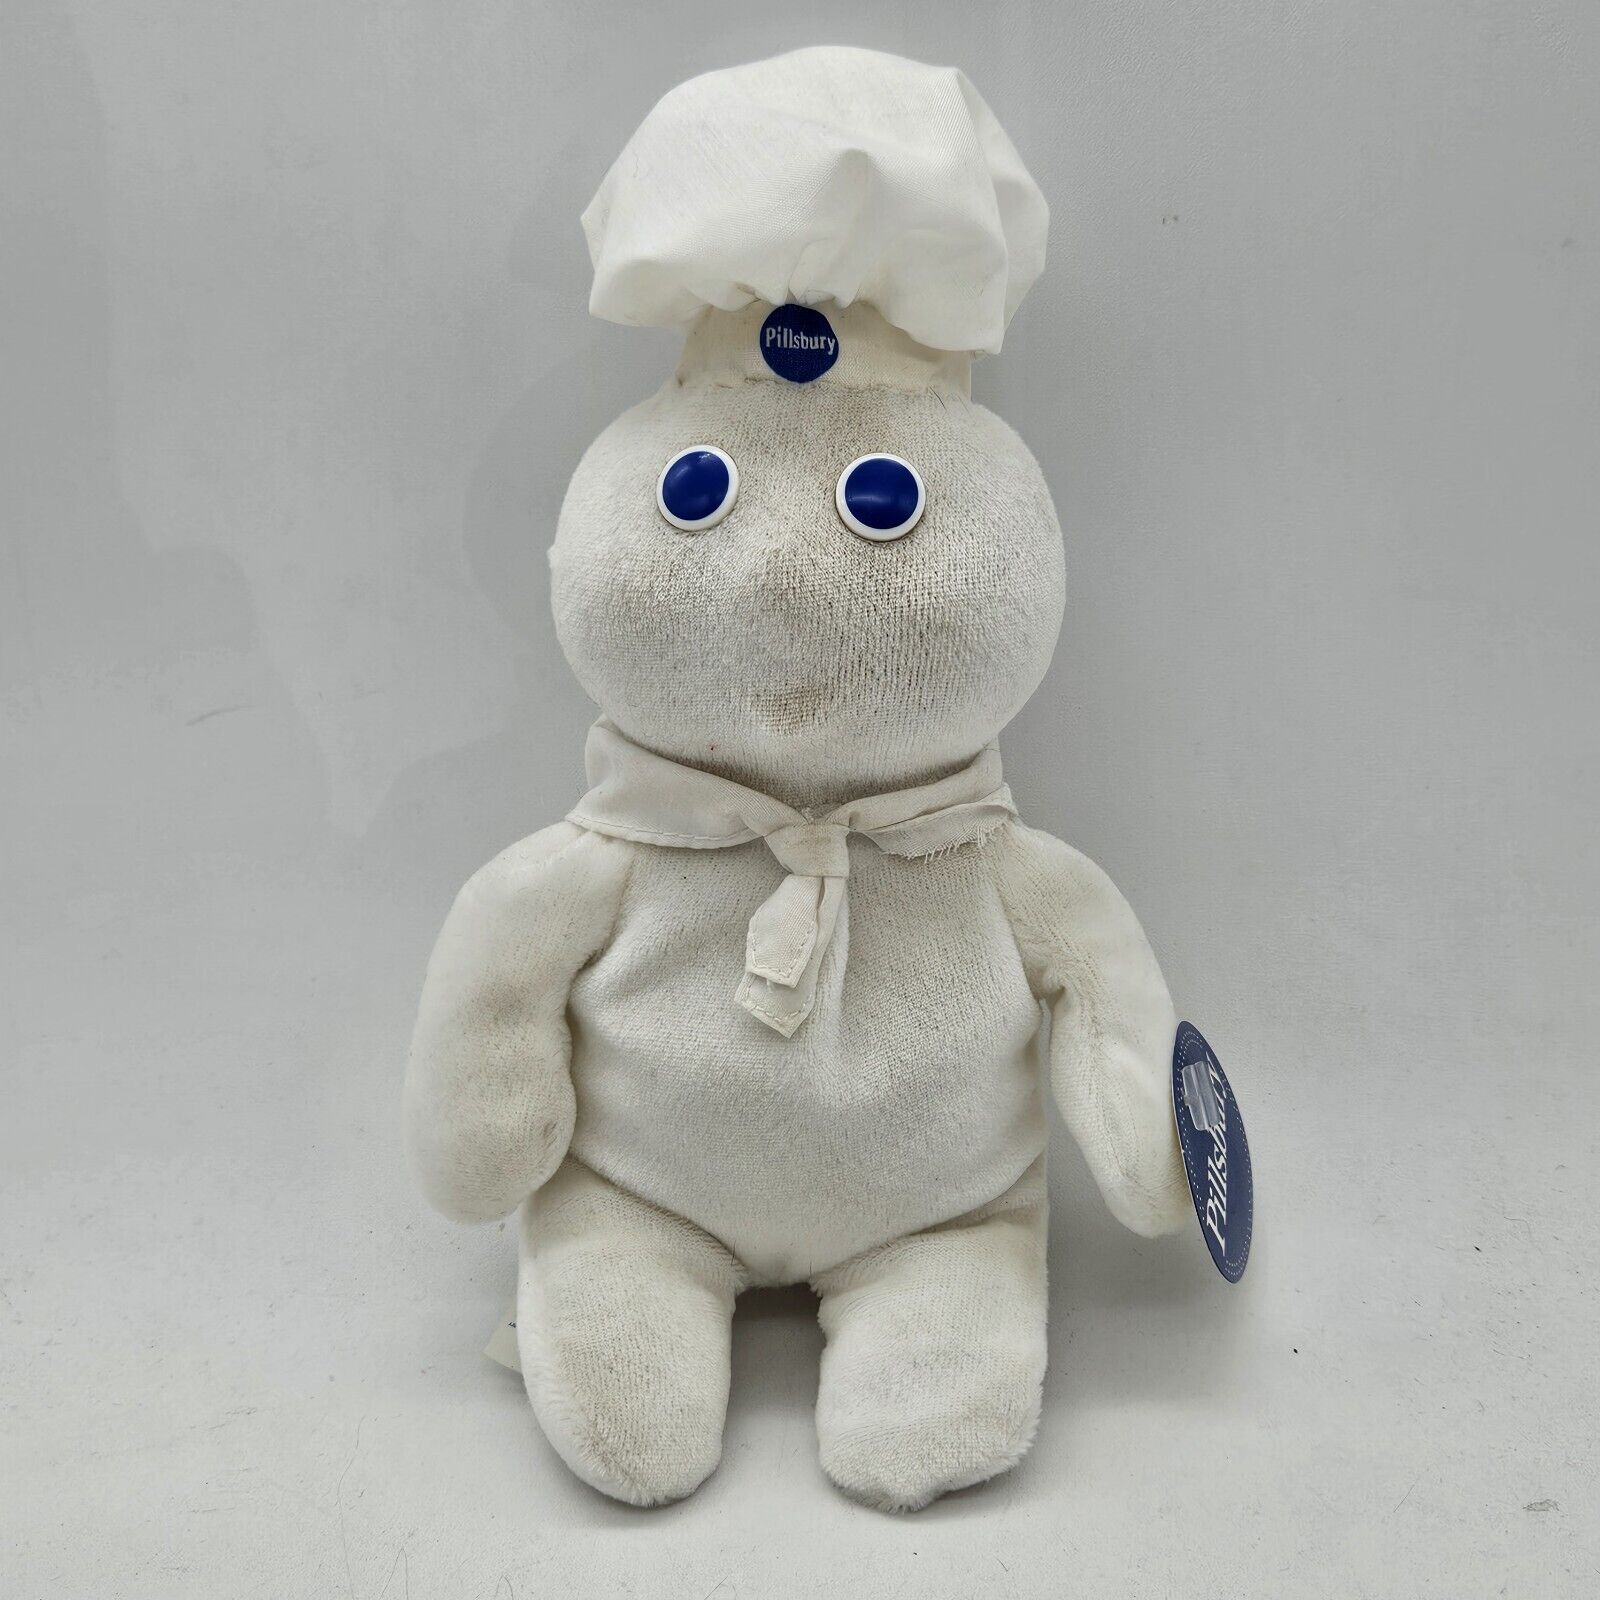 1999 The Pillsbury Doughboy Company Doughboy 9inch Bean Plush Doll 66598